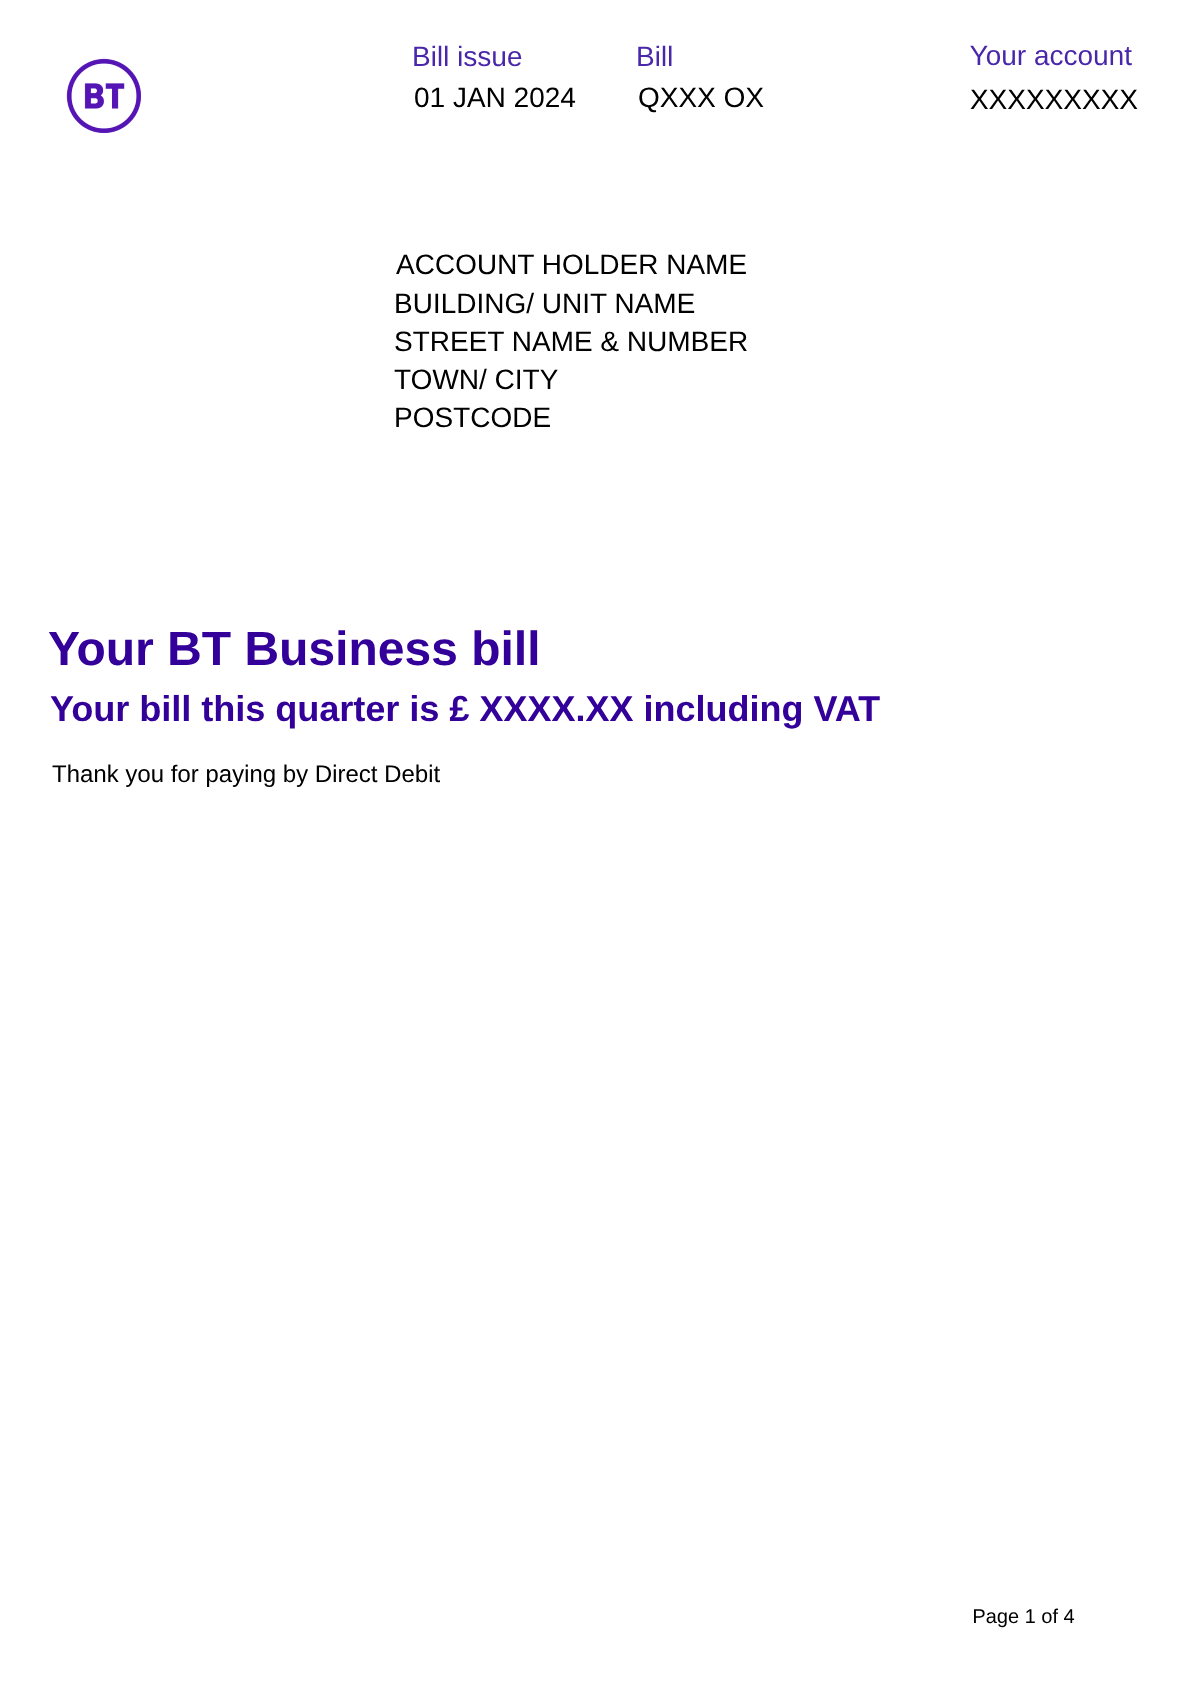 BT Business Bill Page 1